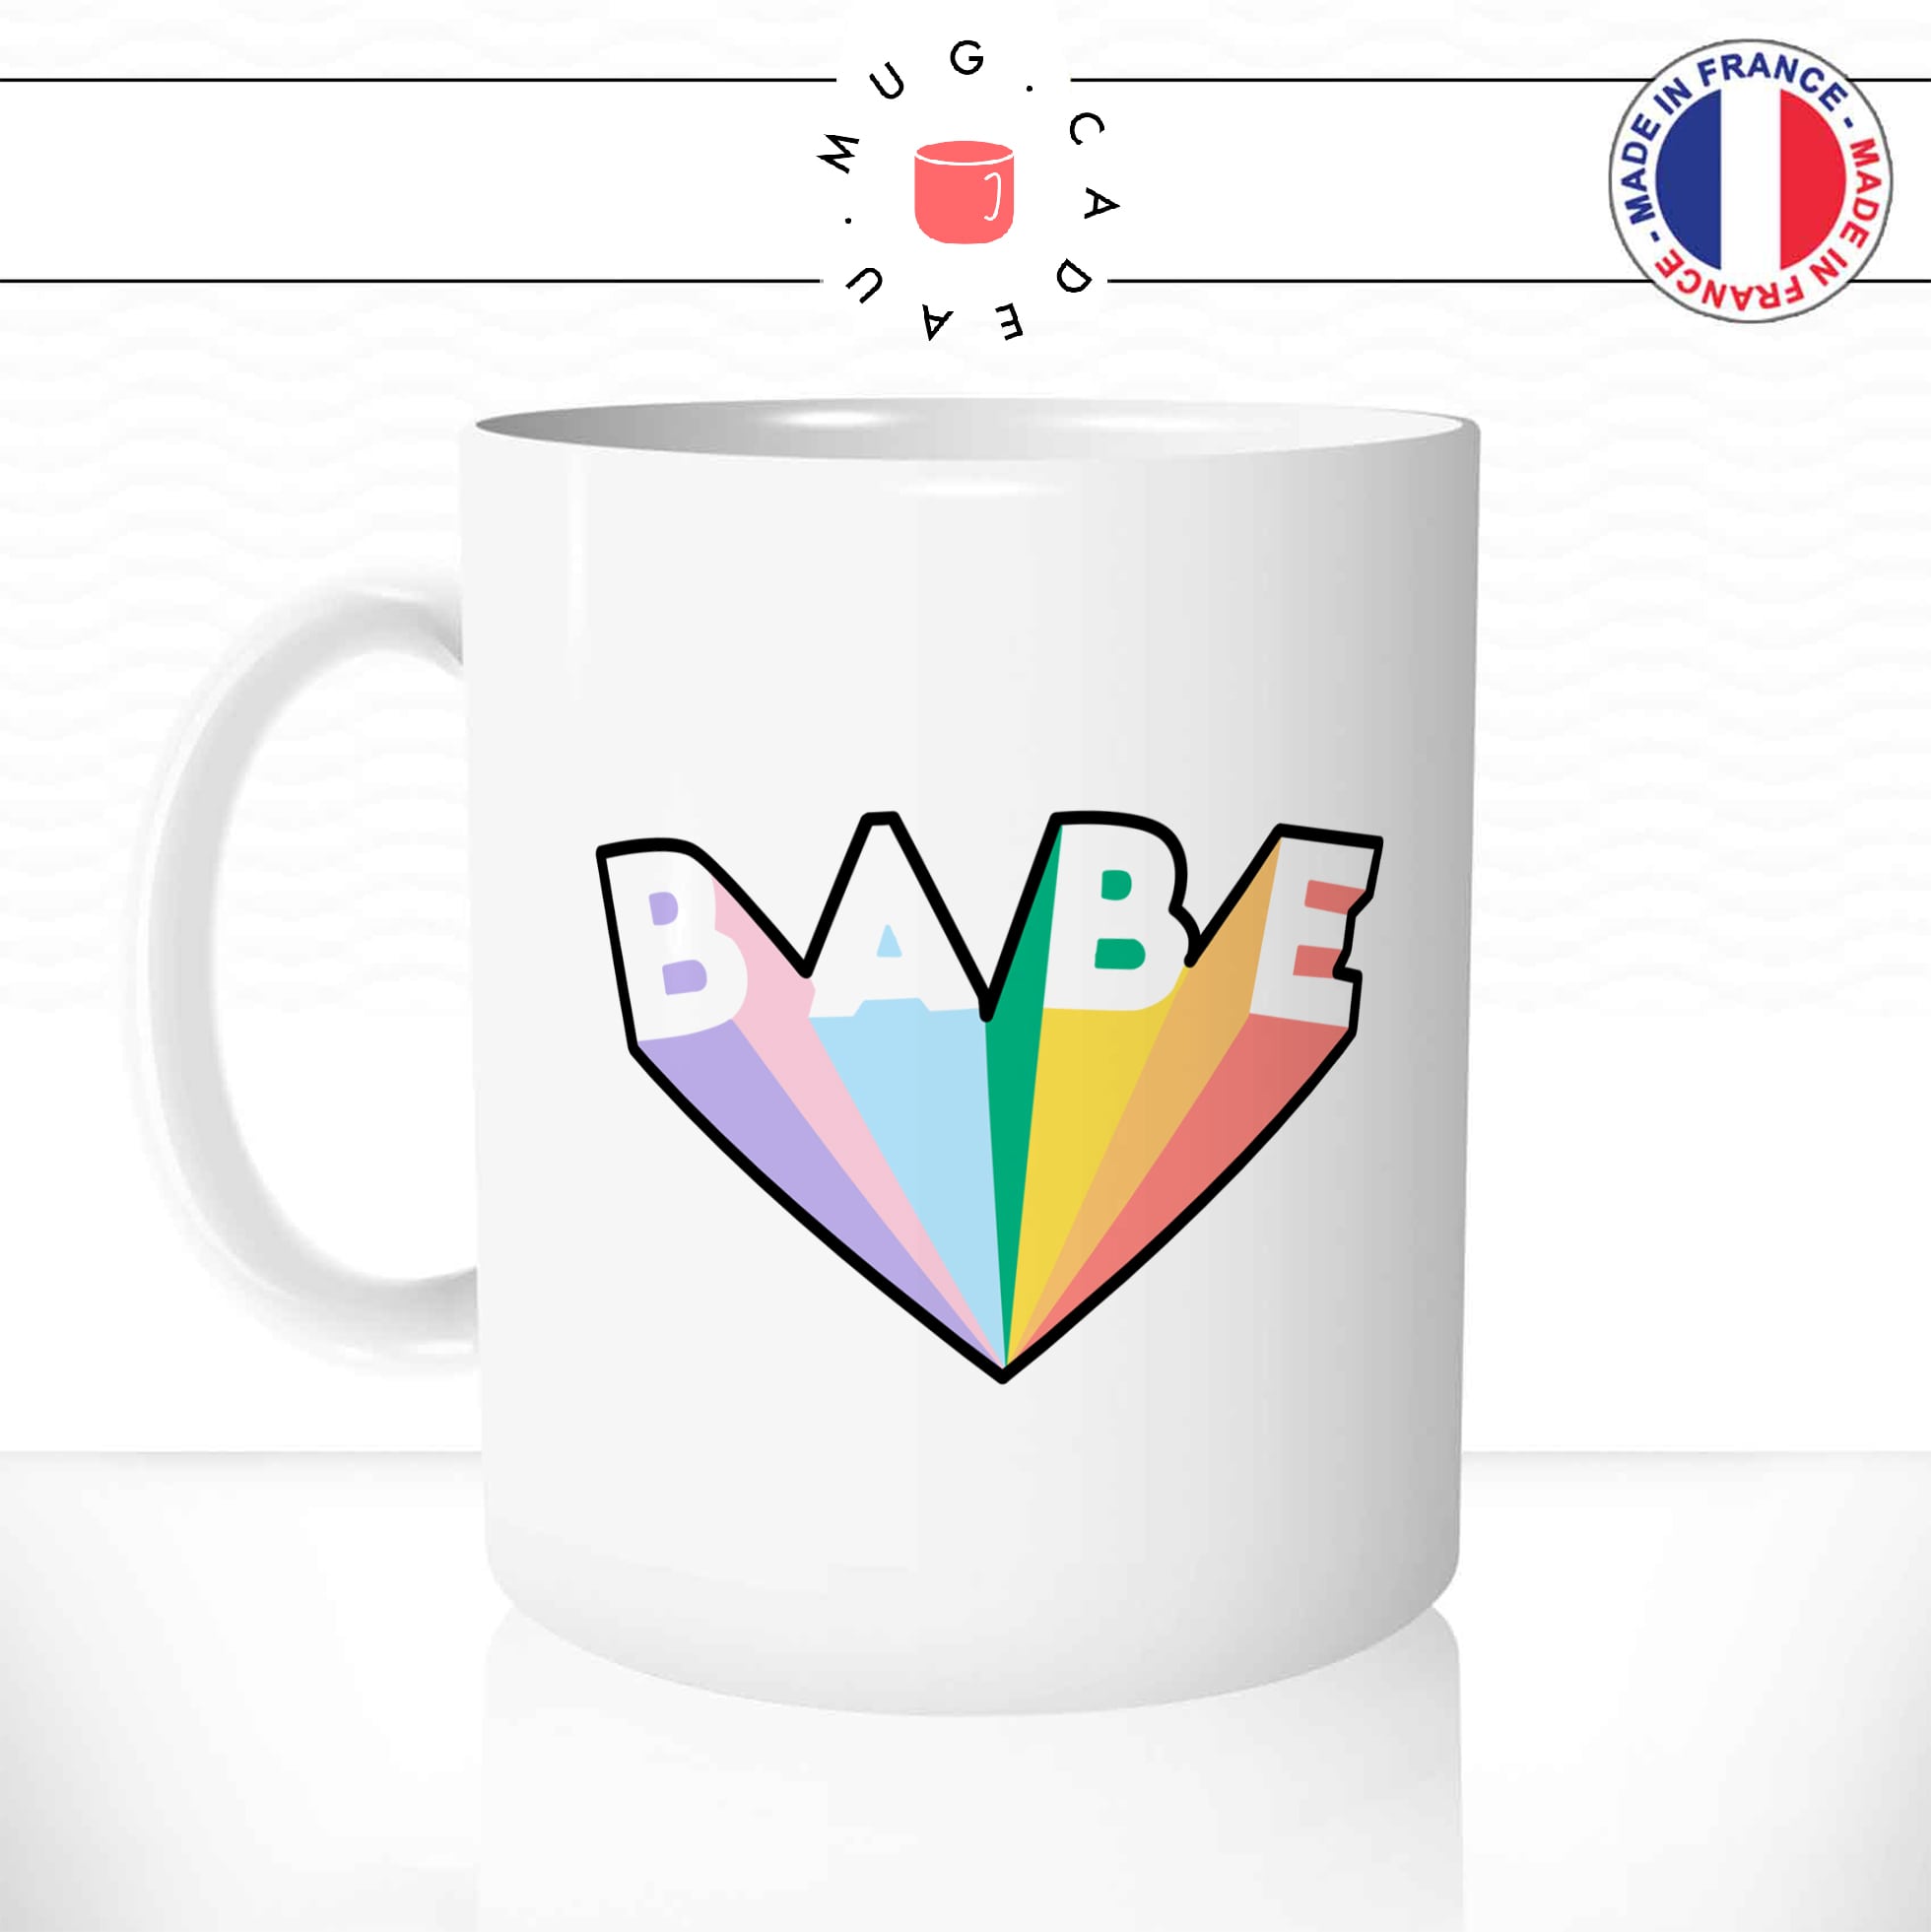 mug-tasse-babe-baby-amour-couleurs-couple-aimer-amoureuix-mignon-dessin-idee-cadeau-original-2